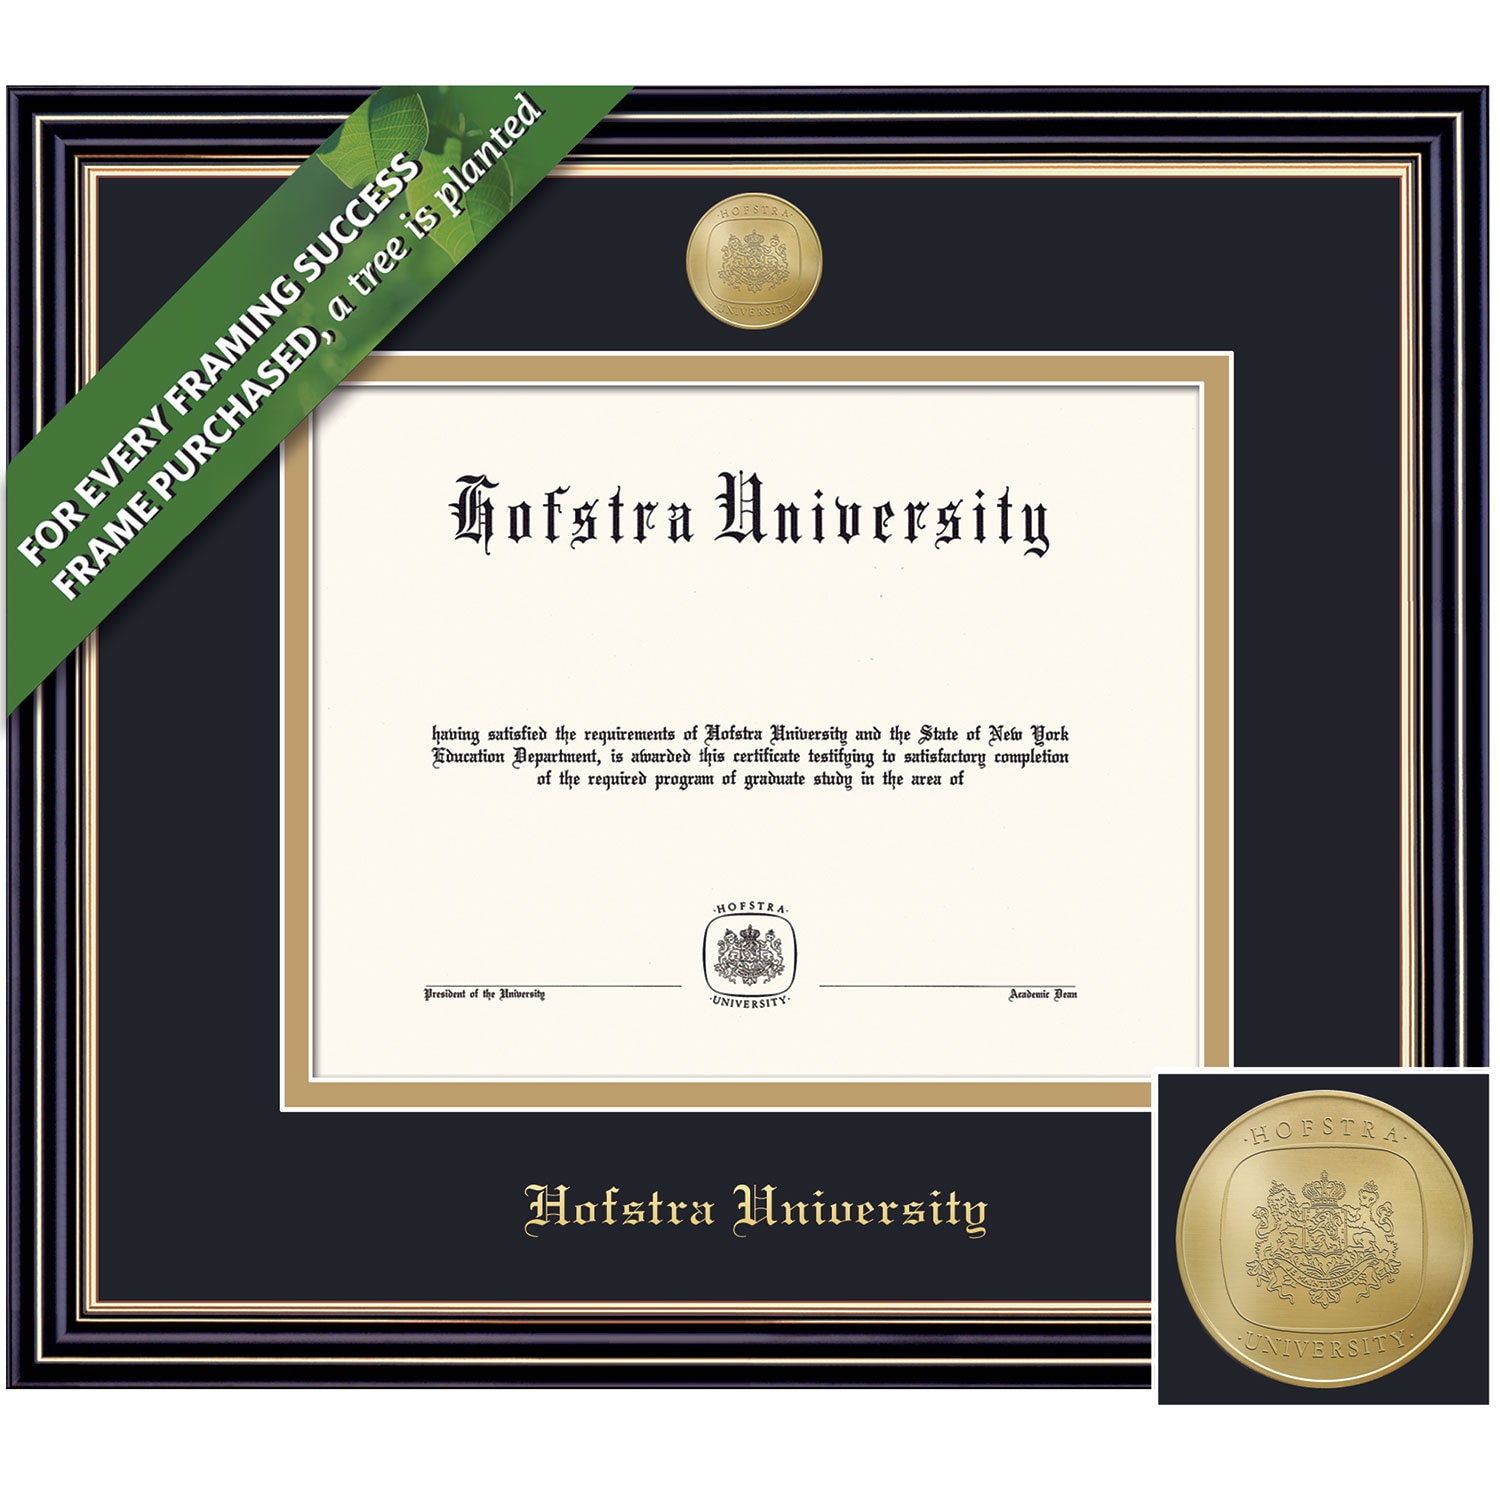 Framing Success 11 x 14 Prestige Gold Medallion Bachelors, Masters Diploma Frame